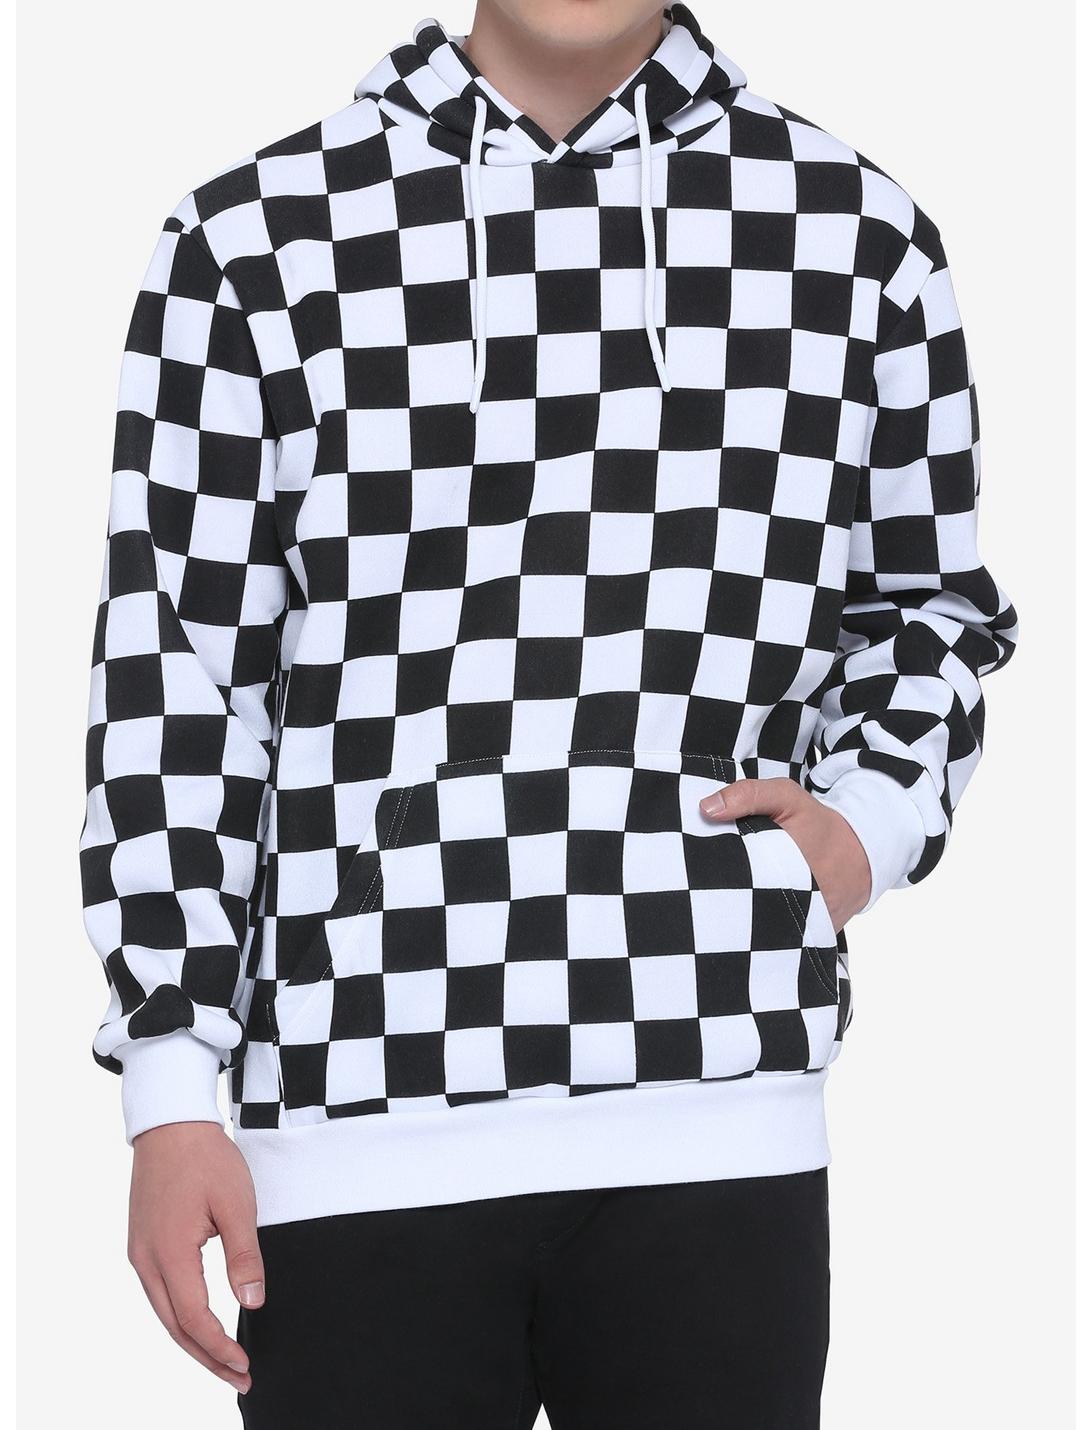 Black & White Checkered Hoodie, Check 1 2 White Black, hi-res